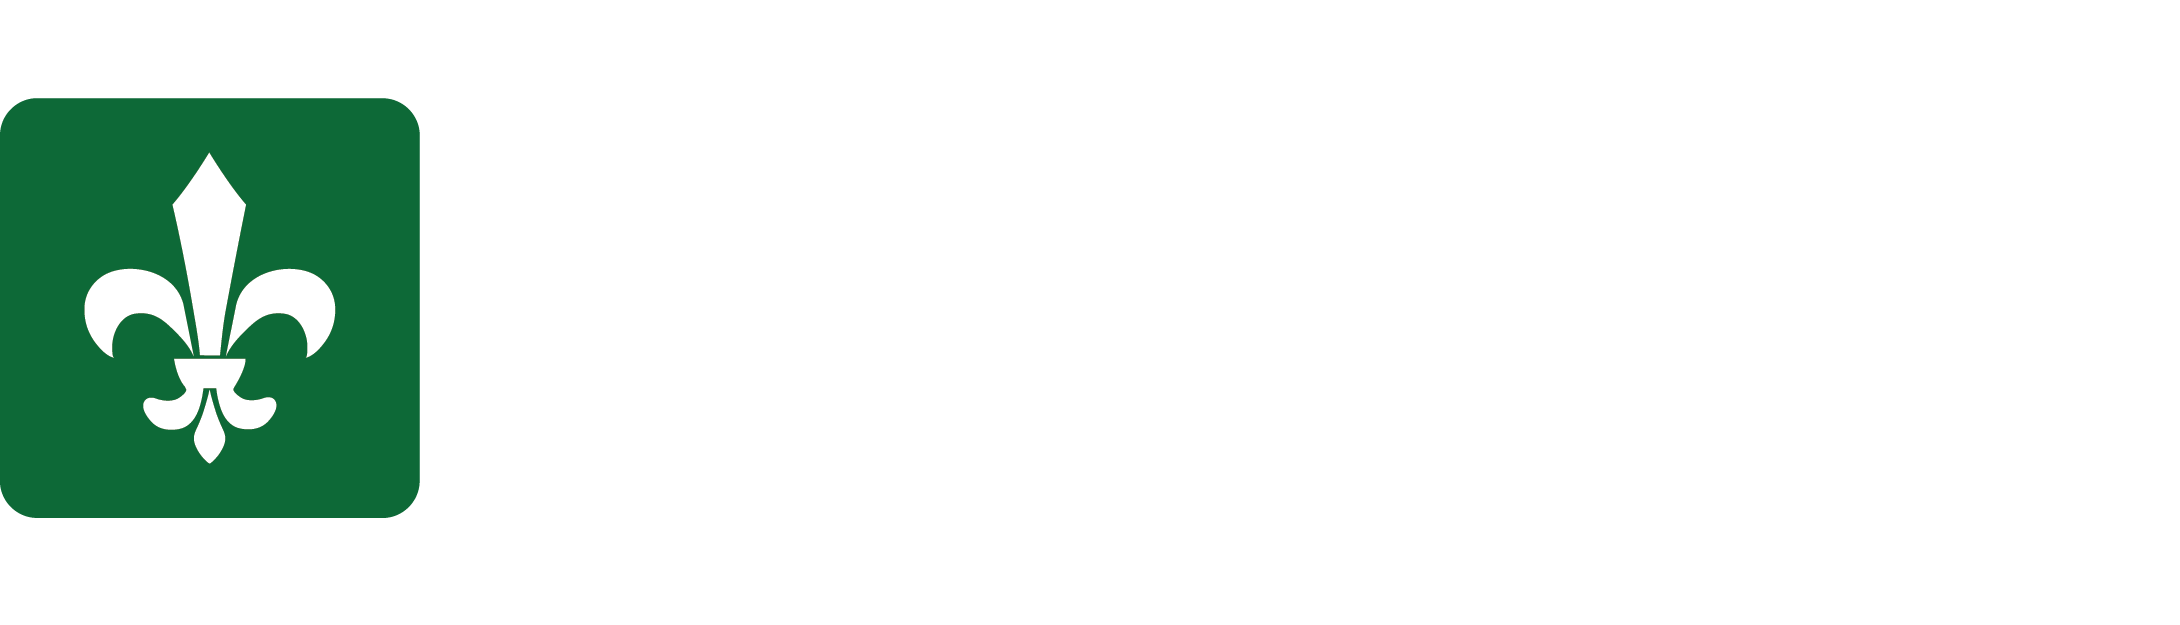 Advantage Marketing, Inc